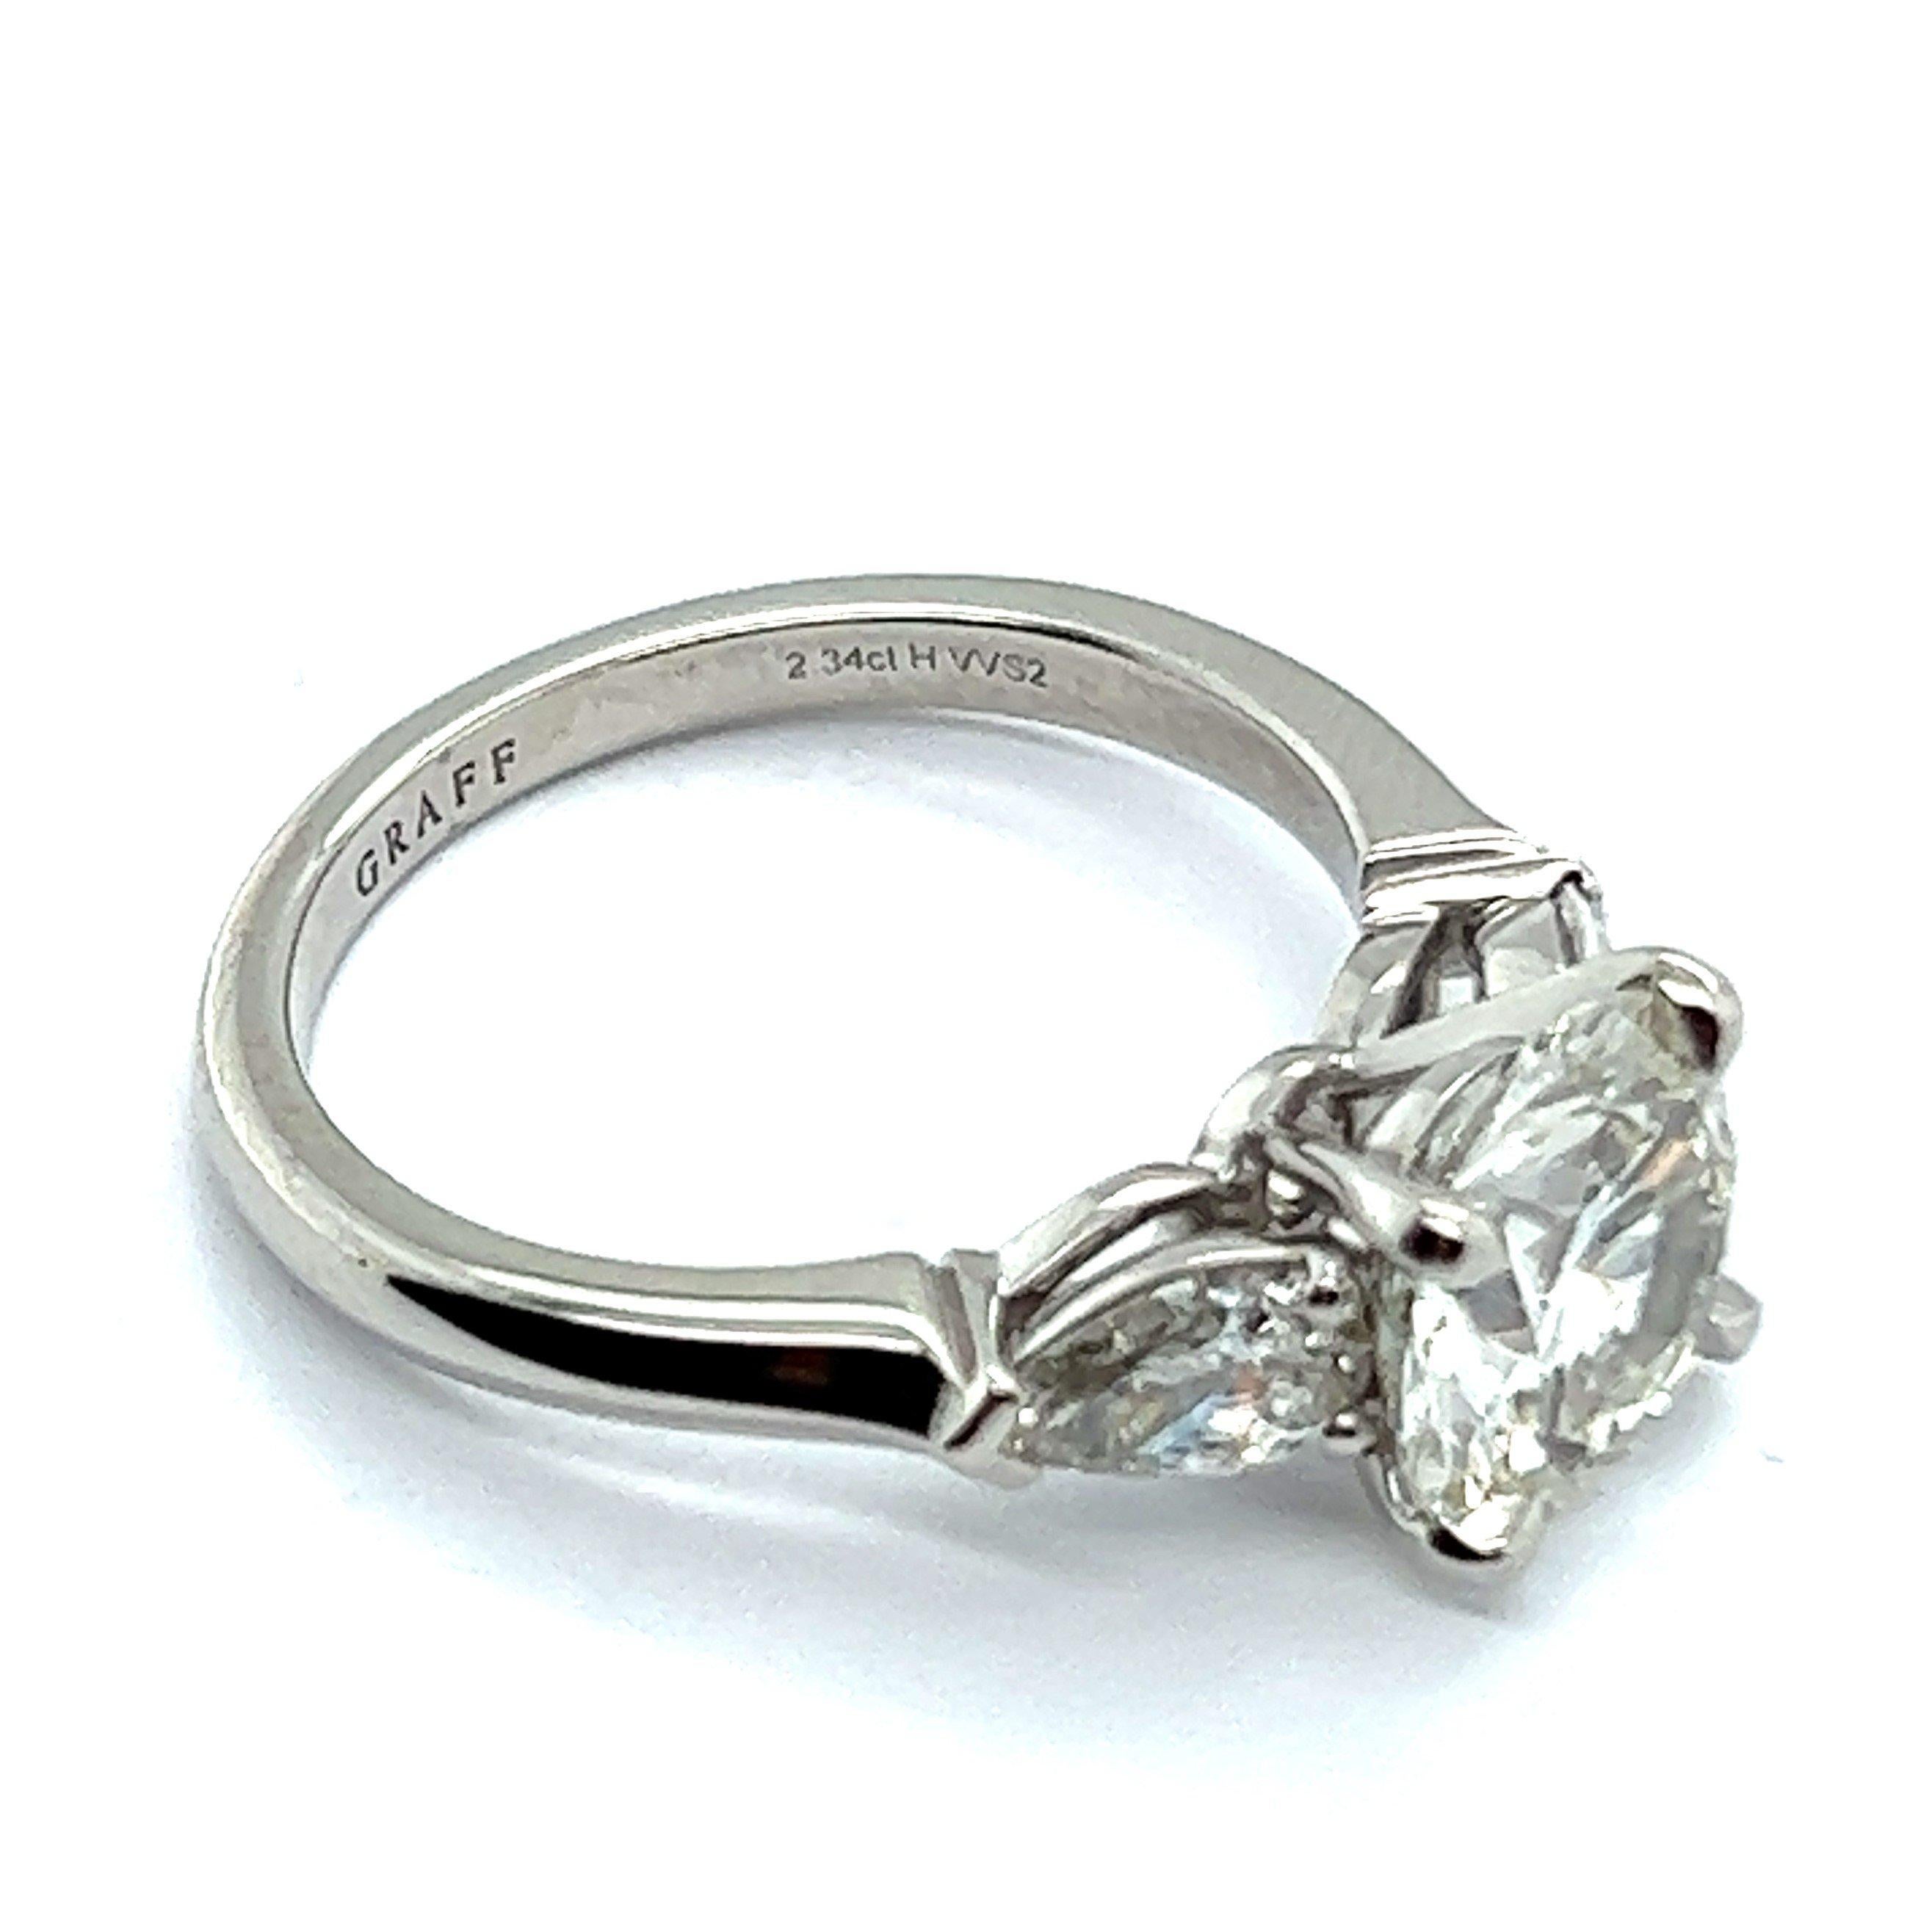 diamond ring price in grt